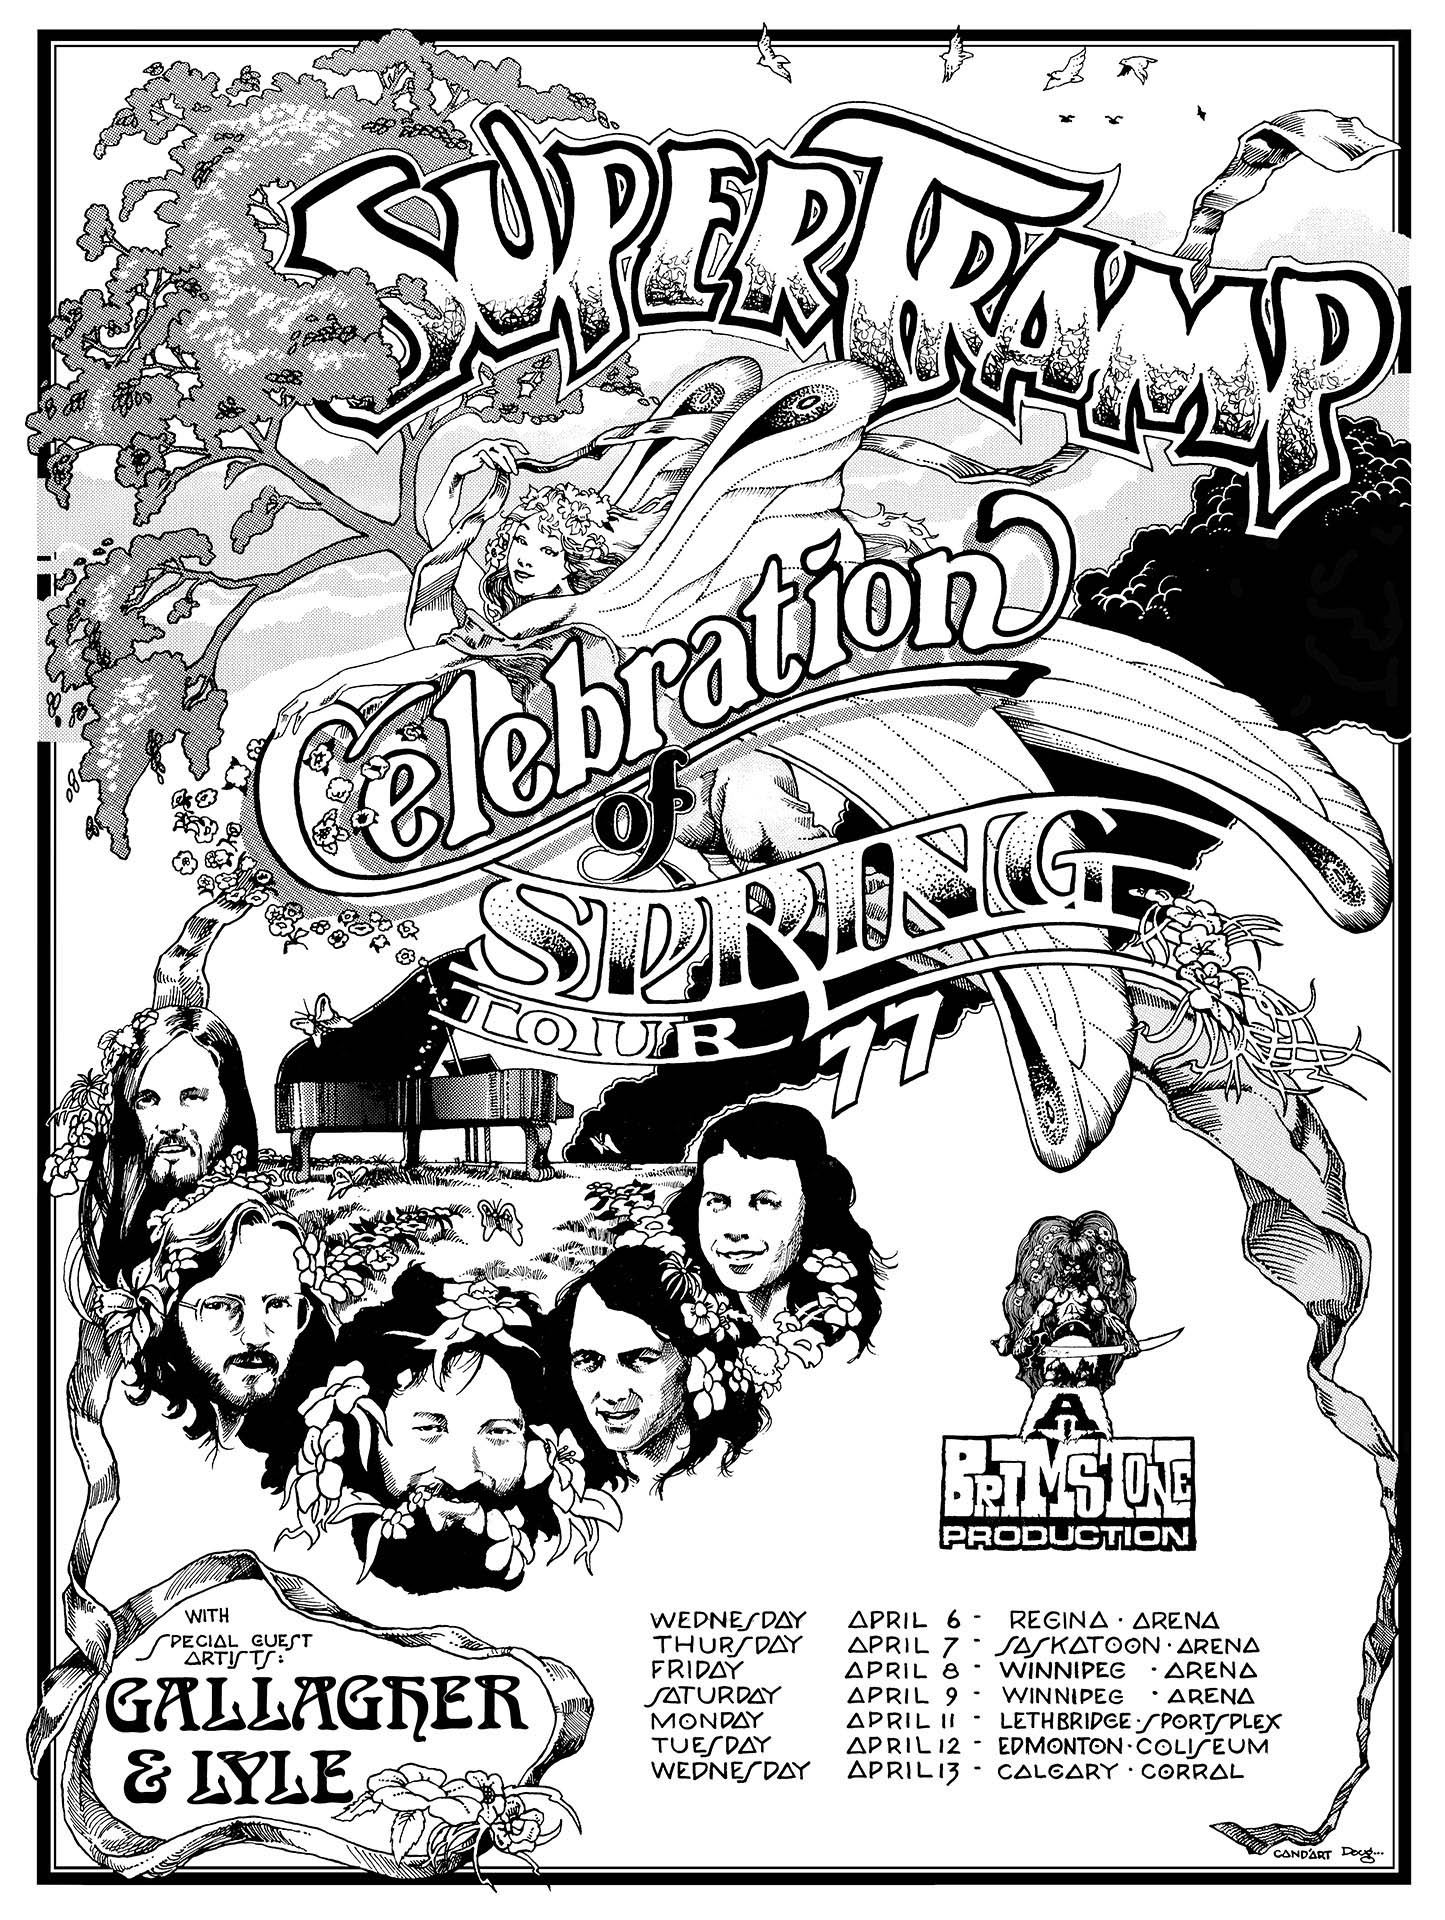 Supertramp - 1977